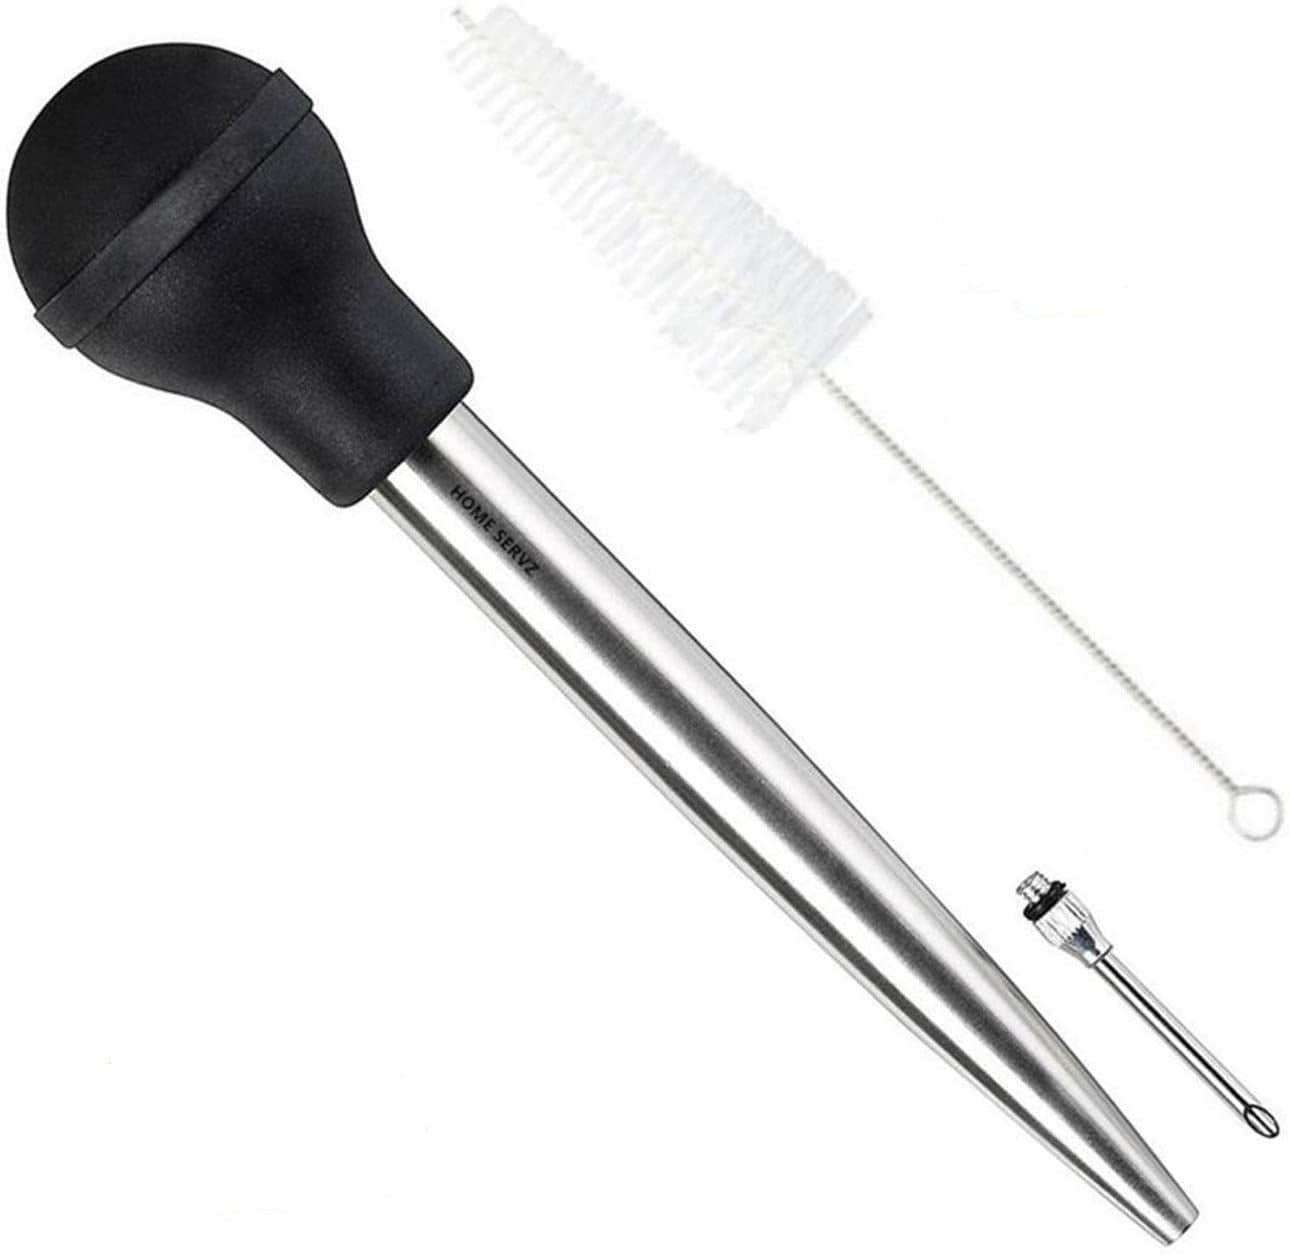 Turkey Baster Set Stainless Steel Black Rubber Brush Syringe Injector Needle Up for Kitchen Home Supply 